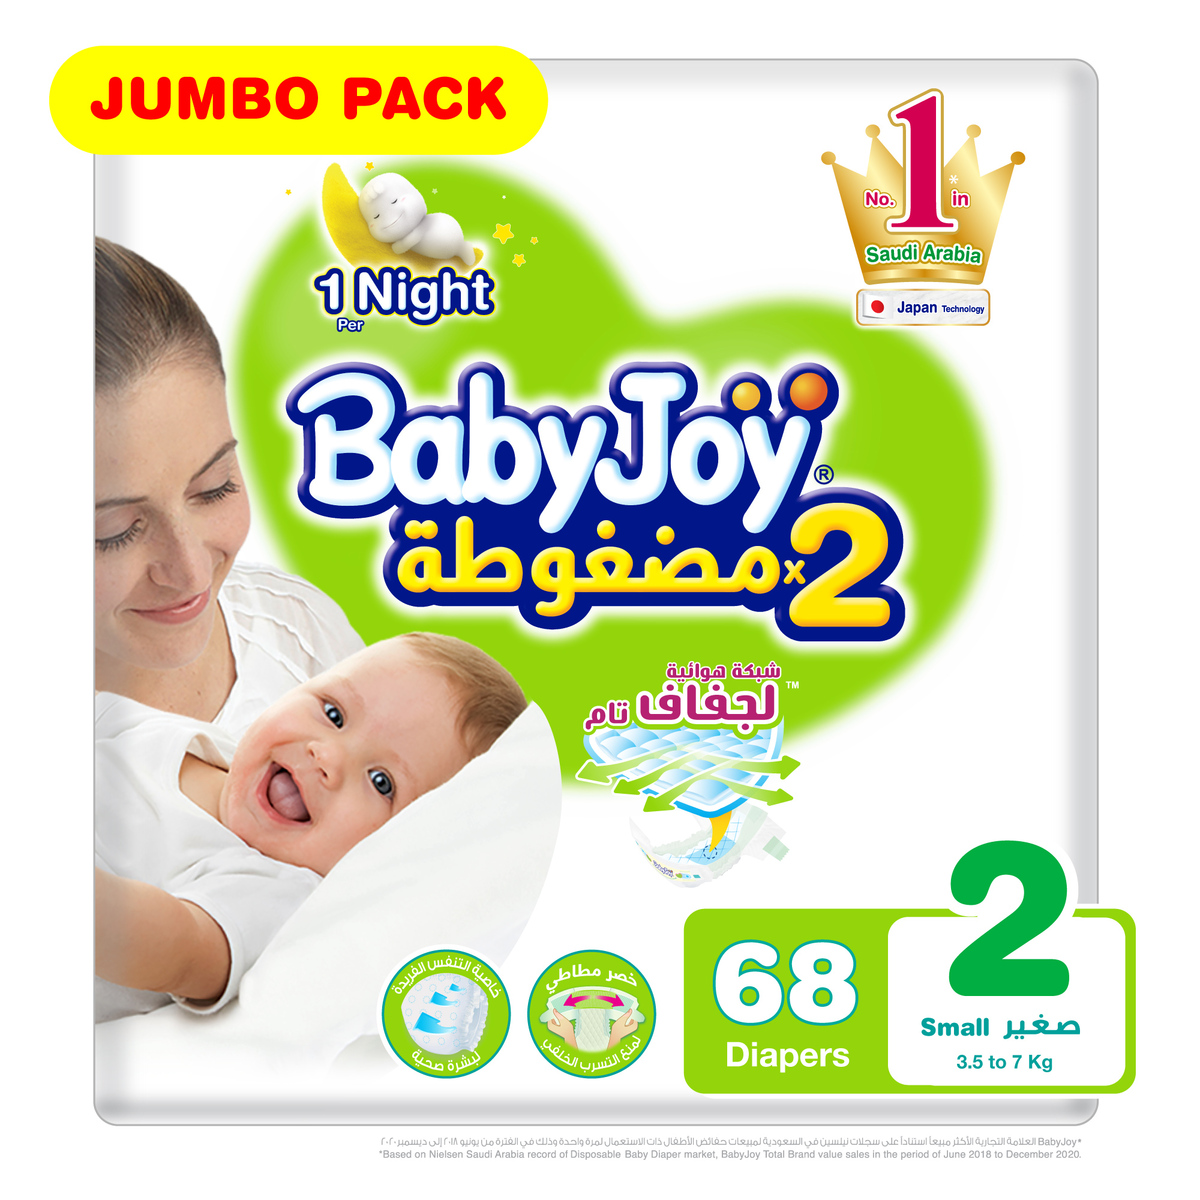 Baby Joy Diaper Size 2 Small 3.5-7kg Jumbo Pack 68pcs